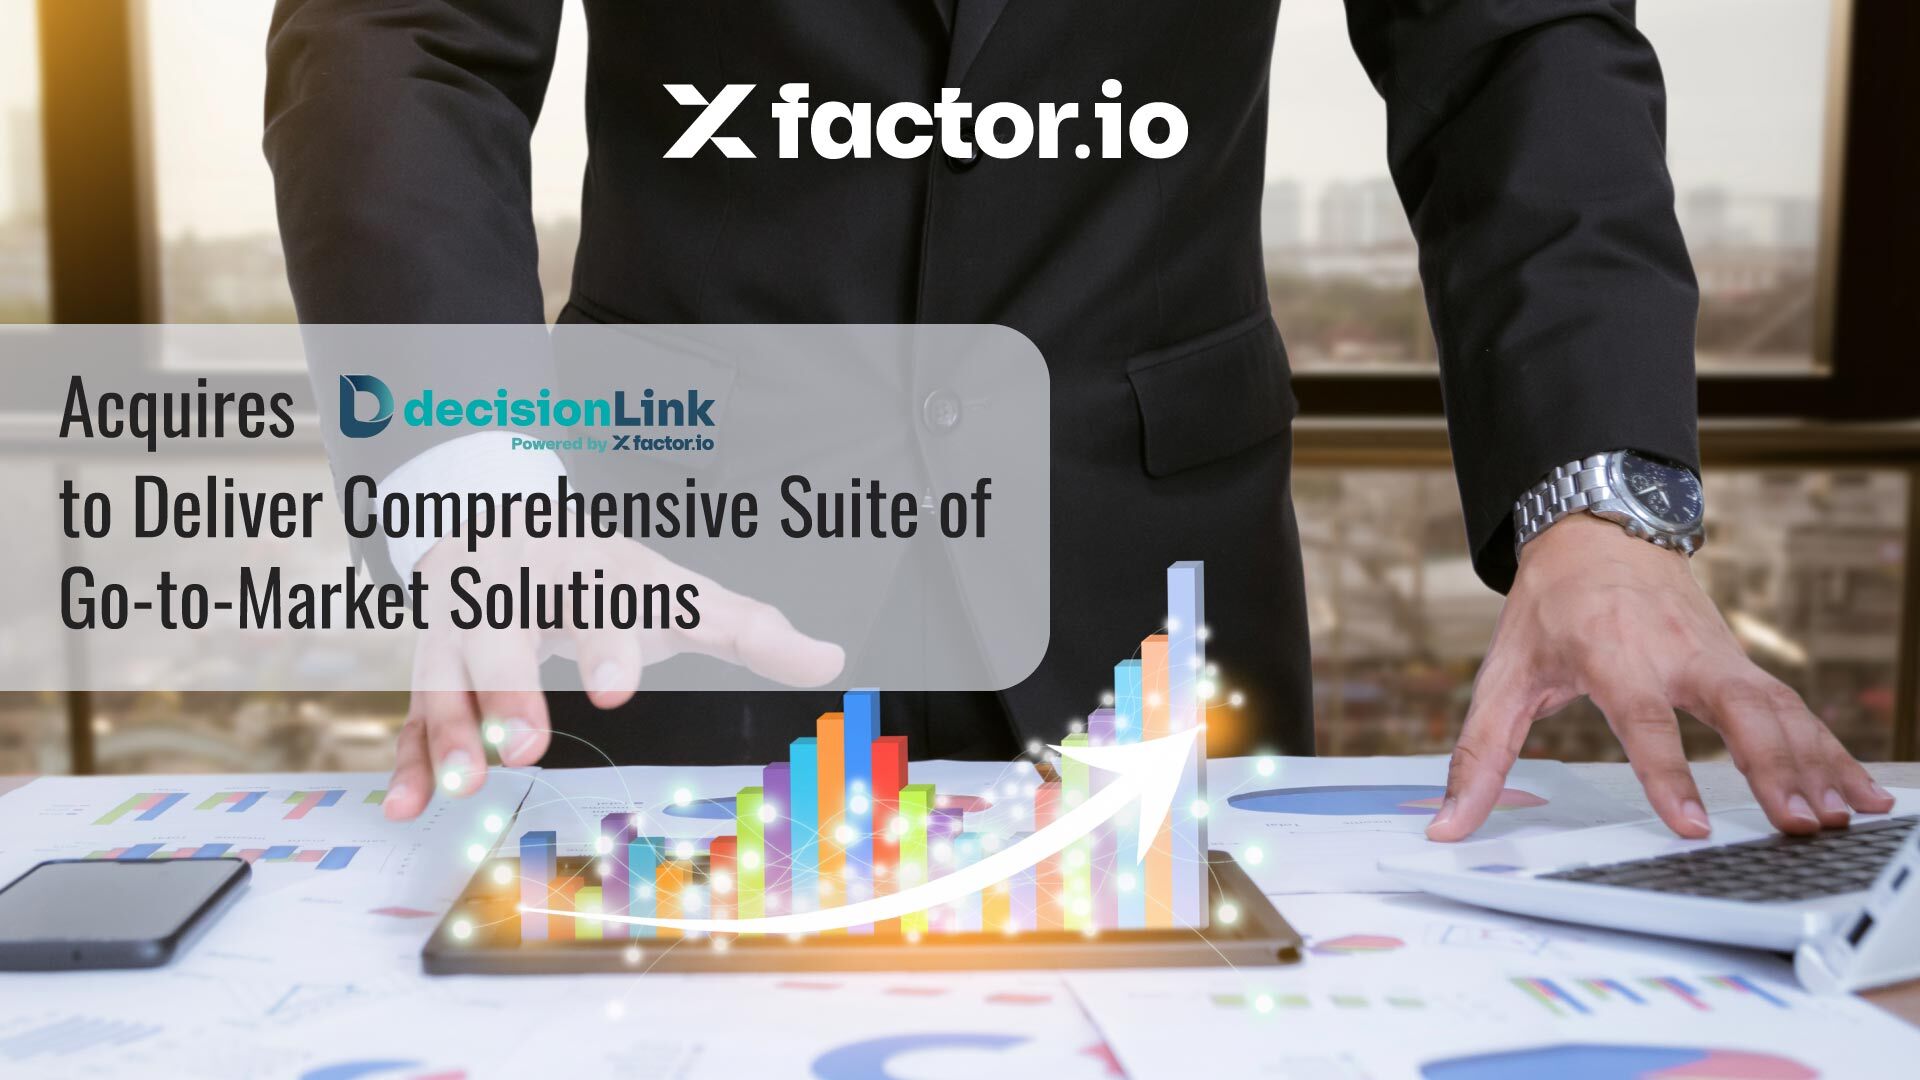 XFactor.io Acquires DecisionLink to Deliver Comprehensive Suite of Go-to-Market Solutions